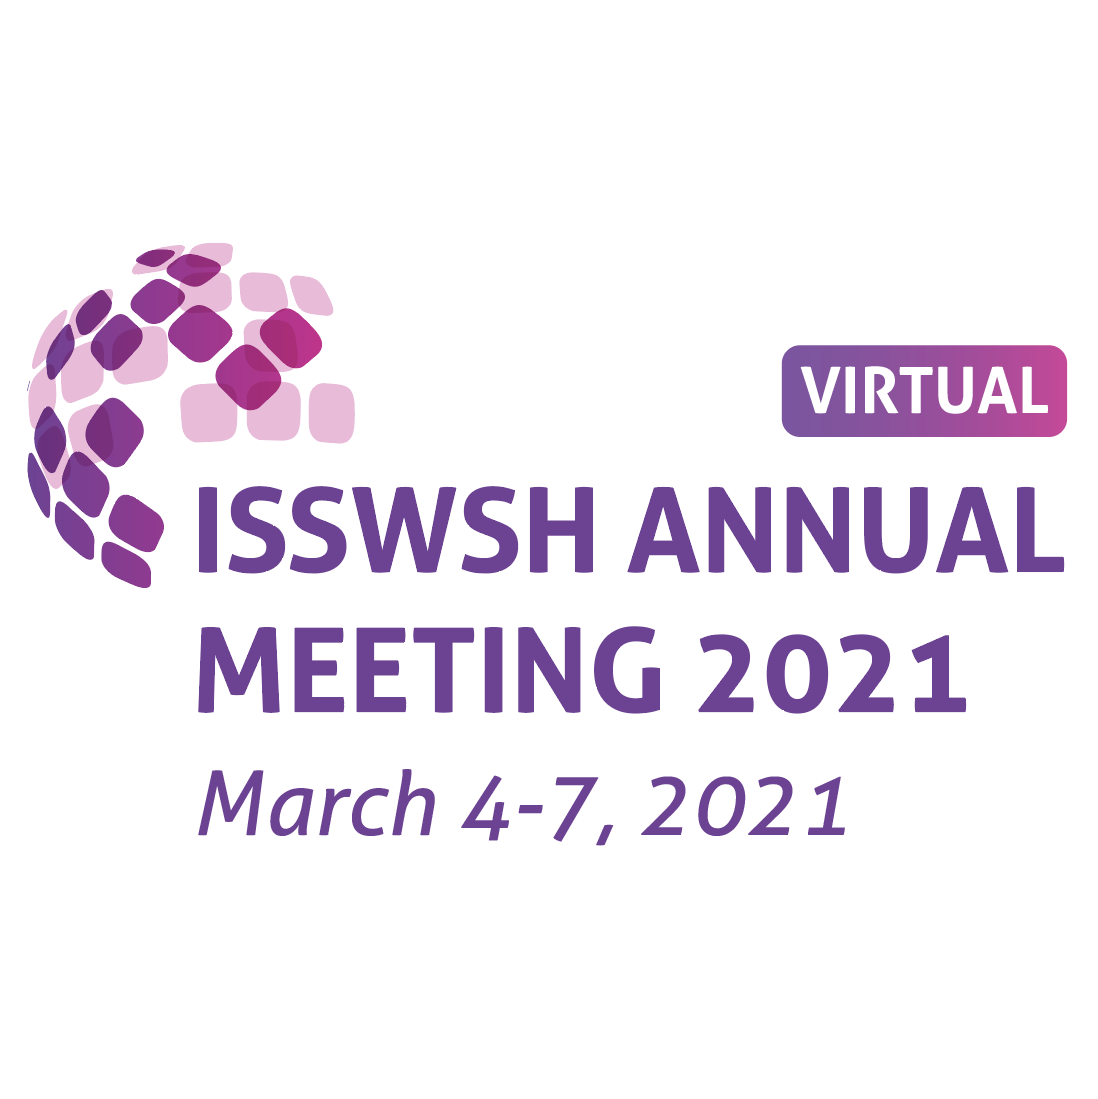 virtual meeting logo 2021 white